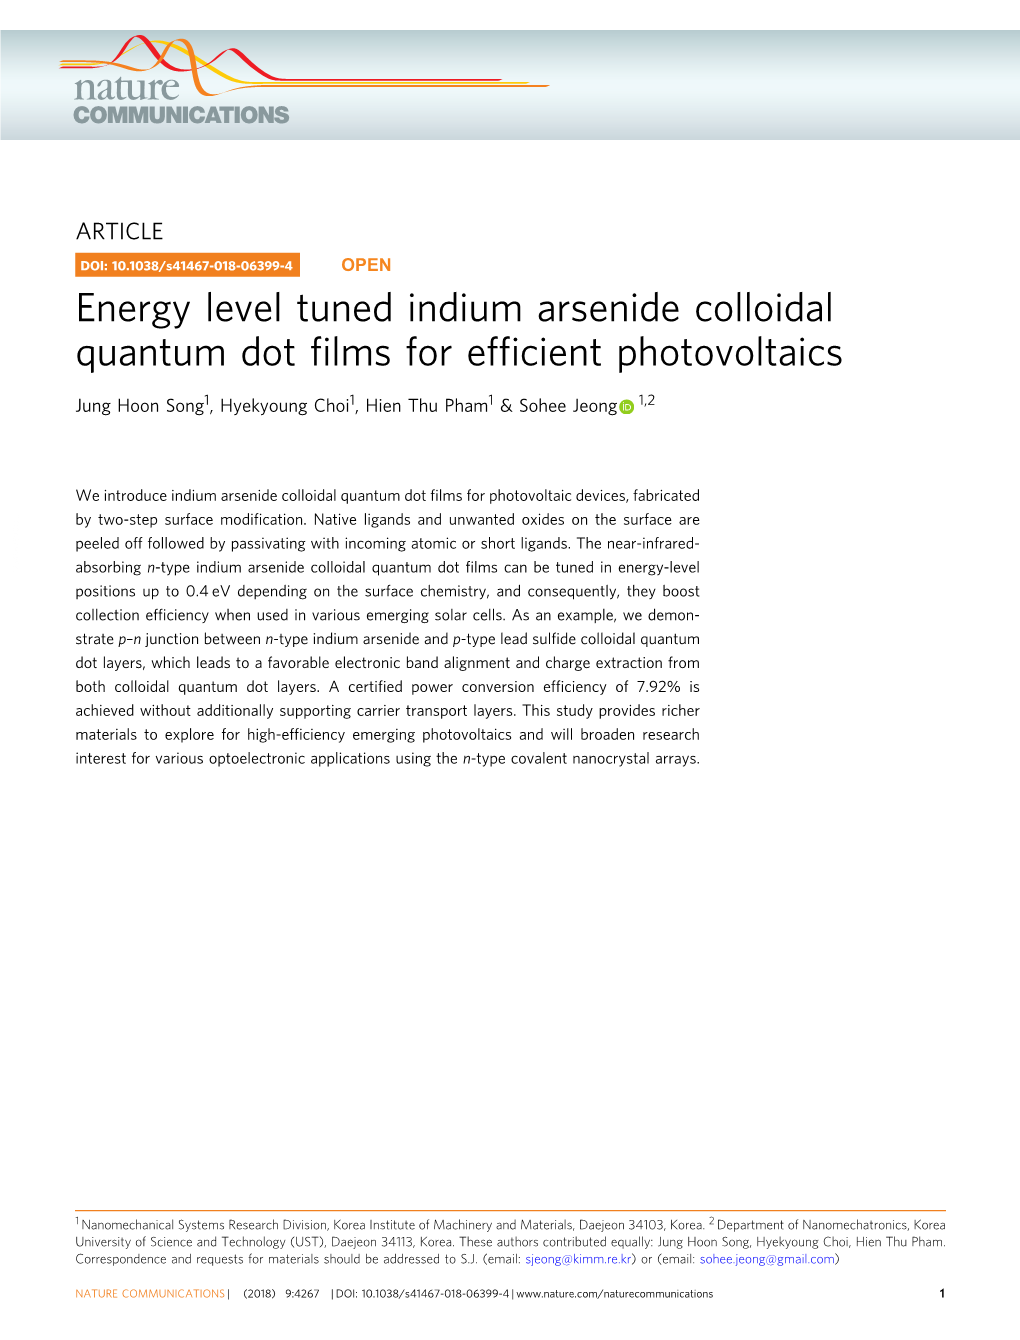 Energy Level Tuned Indium Arsenide Colloidal Quantum Dot Films For